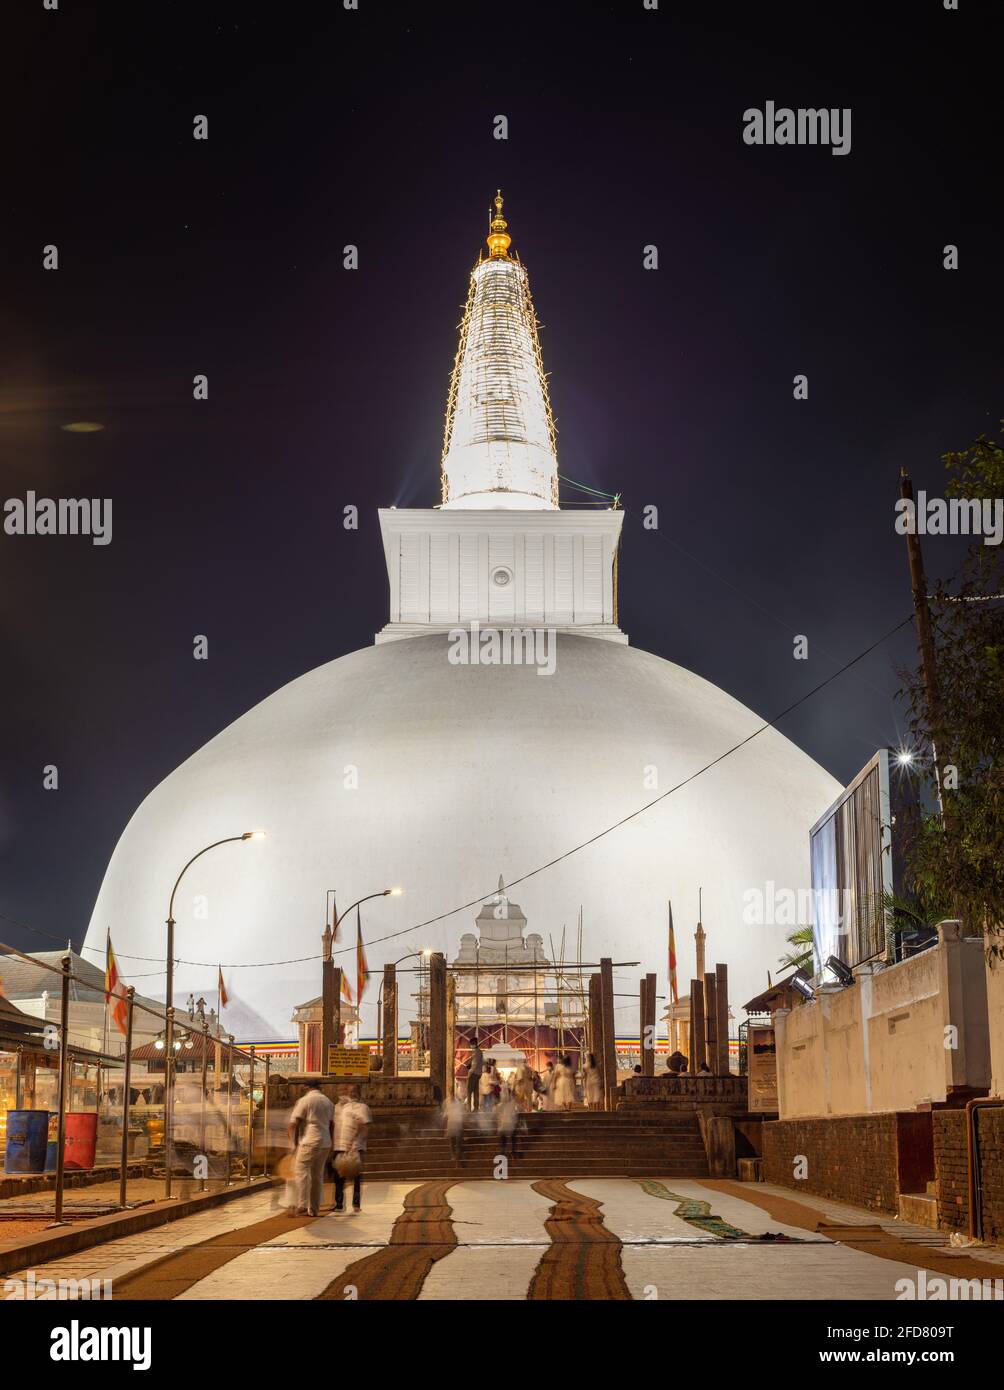 Ruwanwelisaya stupa glowing in the night, it is a hemispherical structure and containing sacred Buddha's relics built by King Dutugamunu. Stock Photo